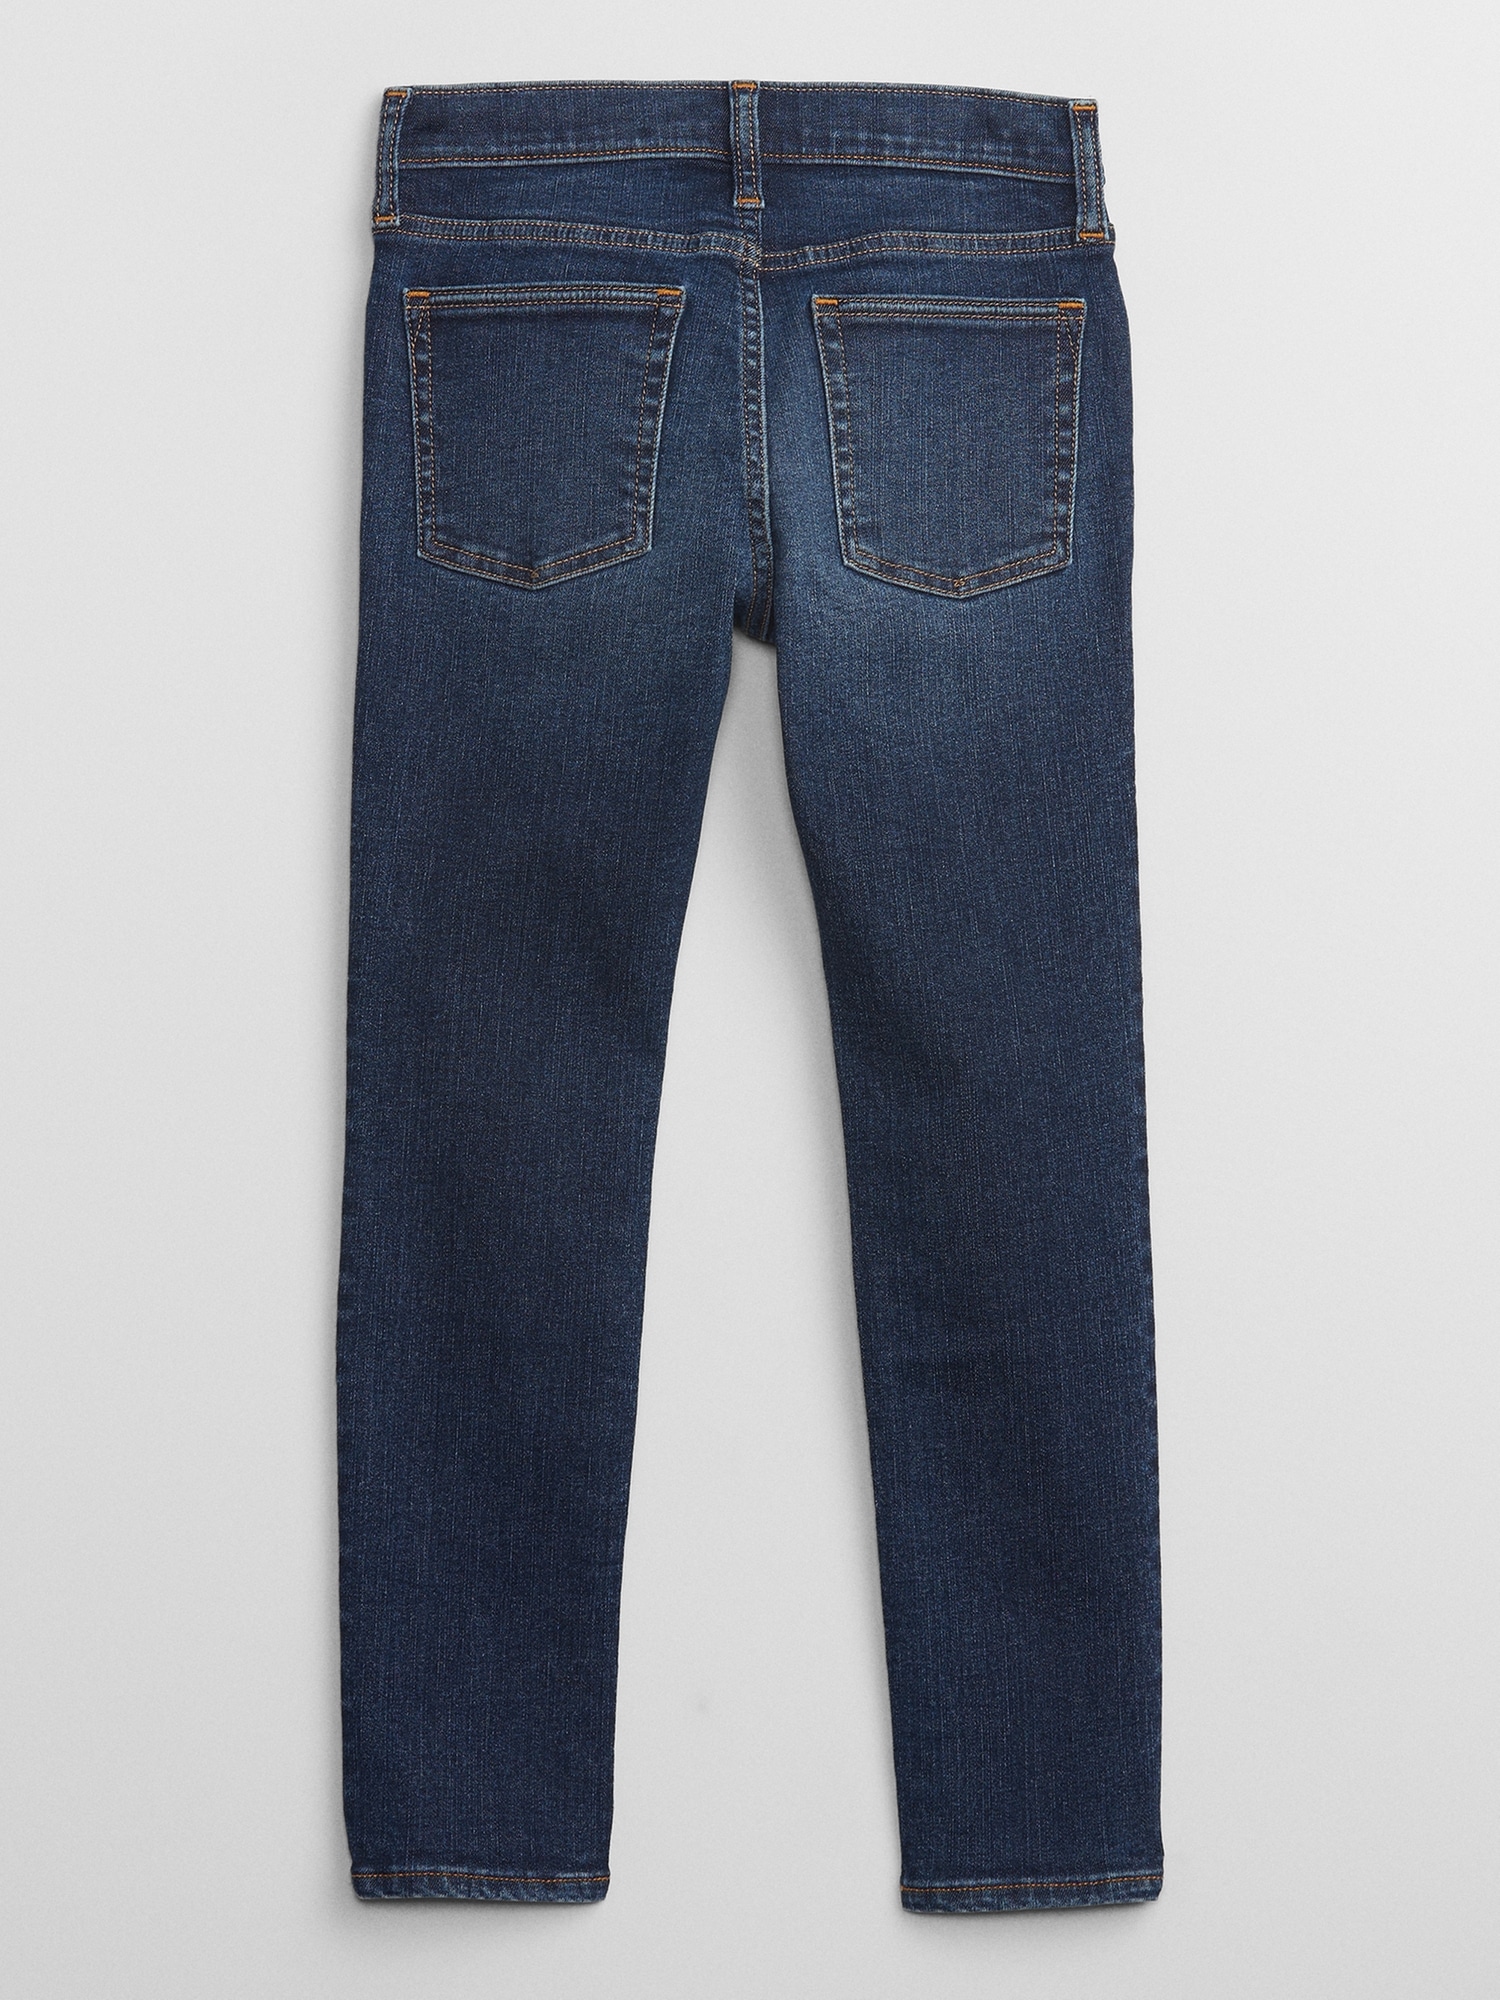 Kids Skinny Jeans | Gap Factory